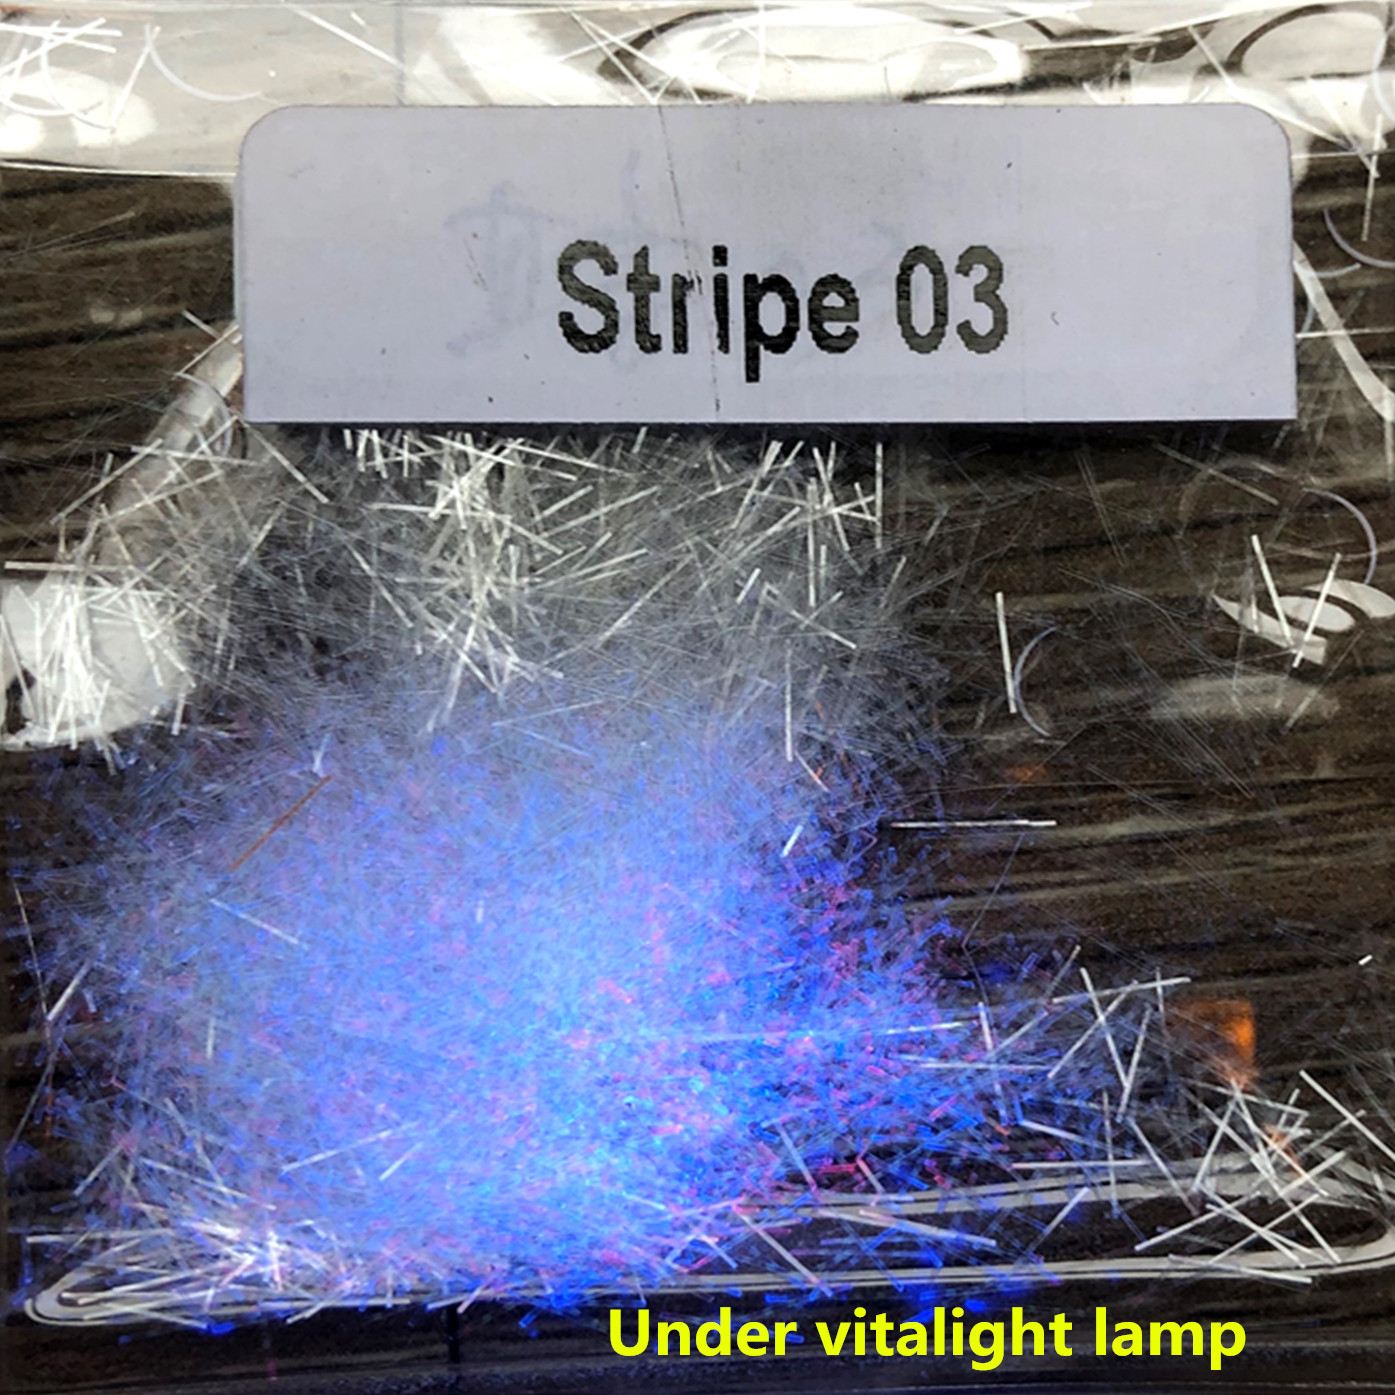 Anti-fake Fiber Anti forgery fiber Strip 03